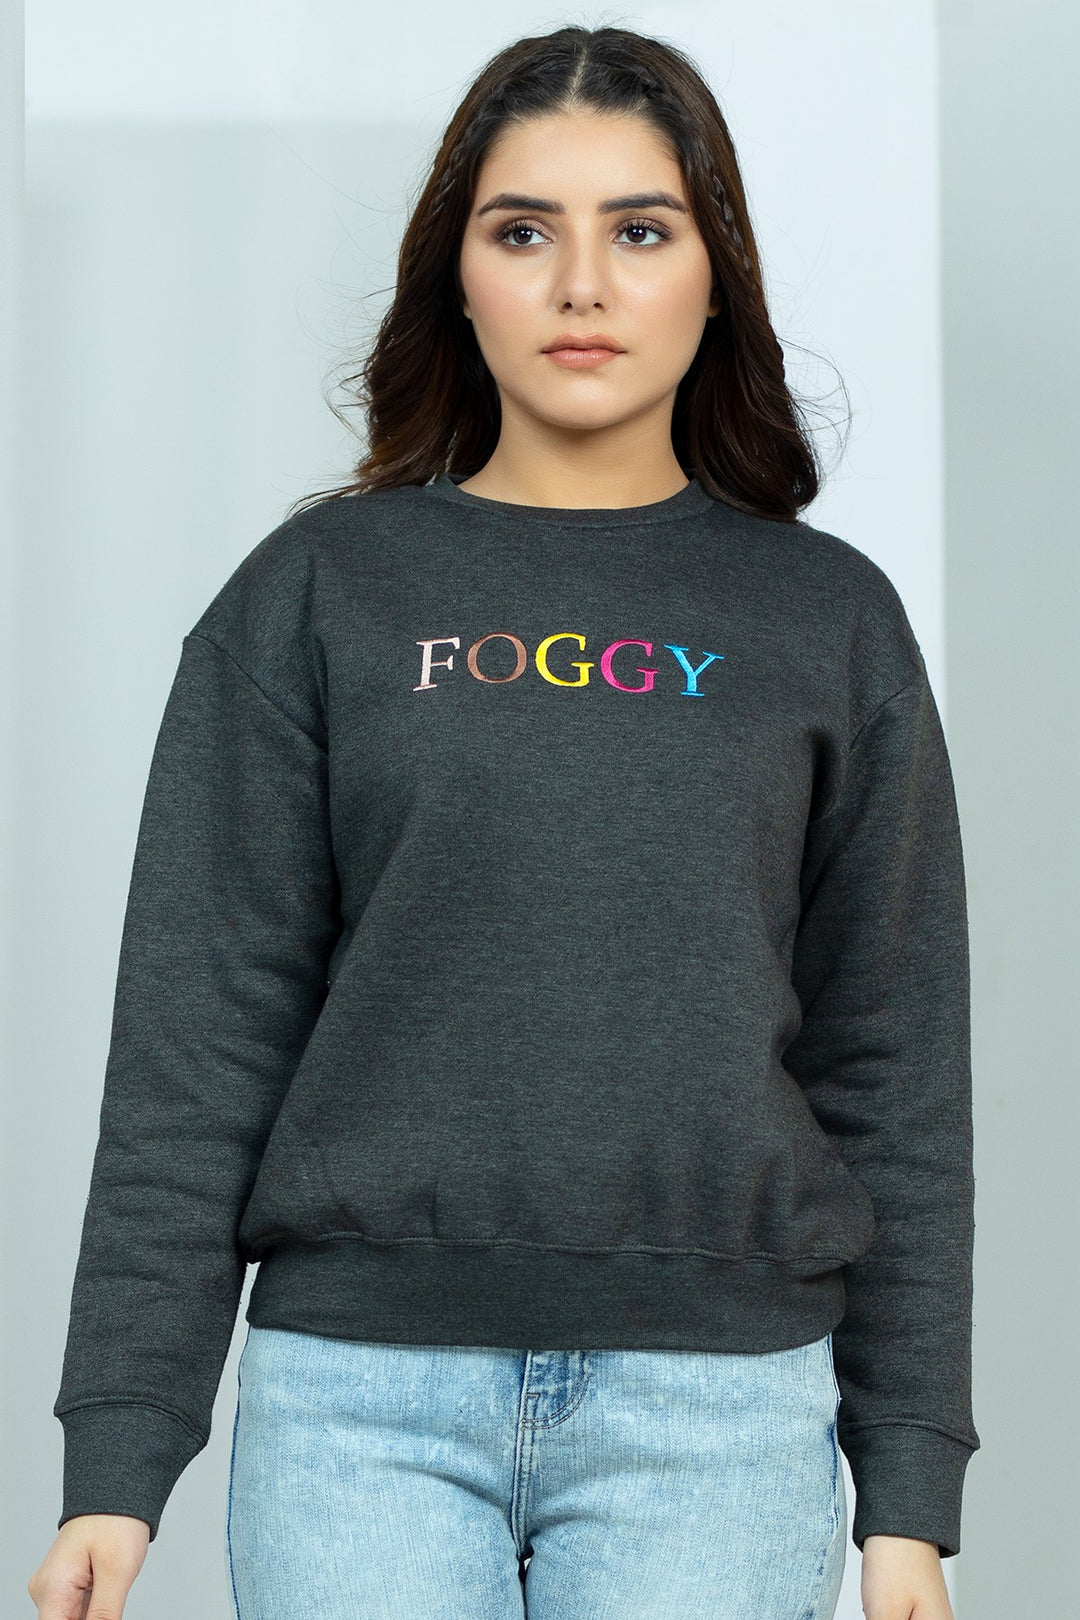 Foggy Charcoal Sweatshirt - W21 - WSW0017